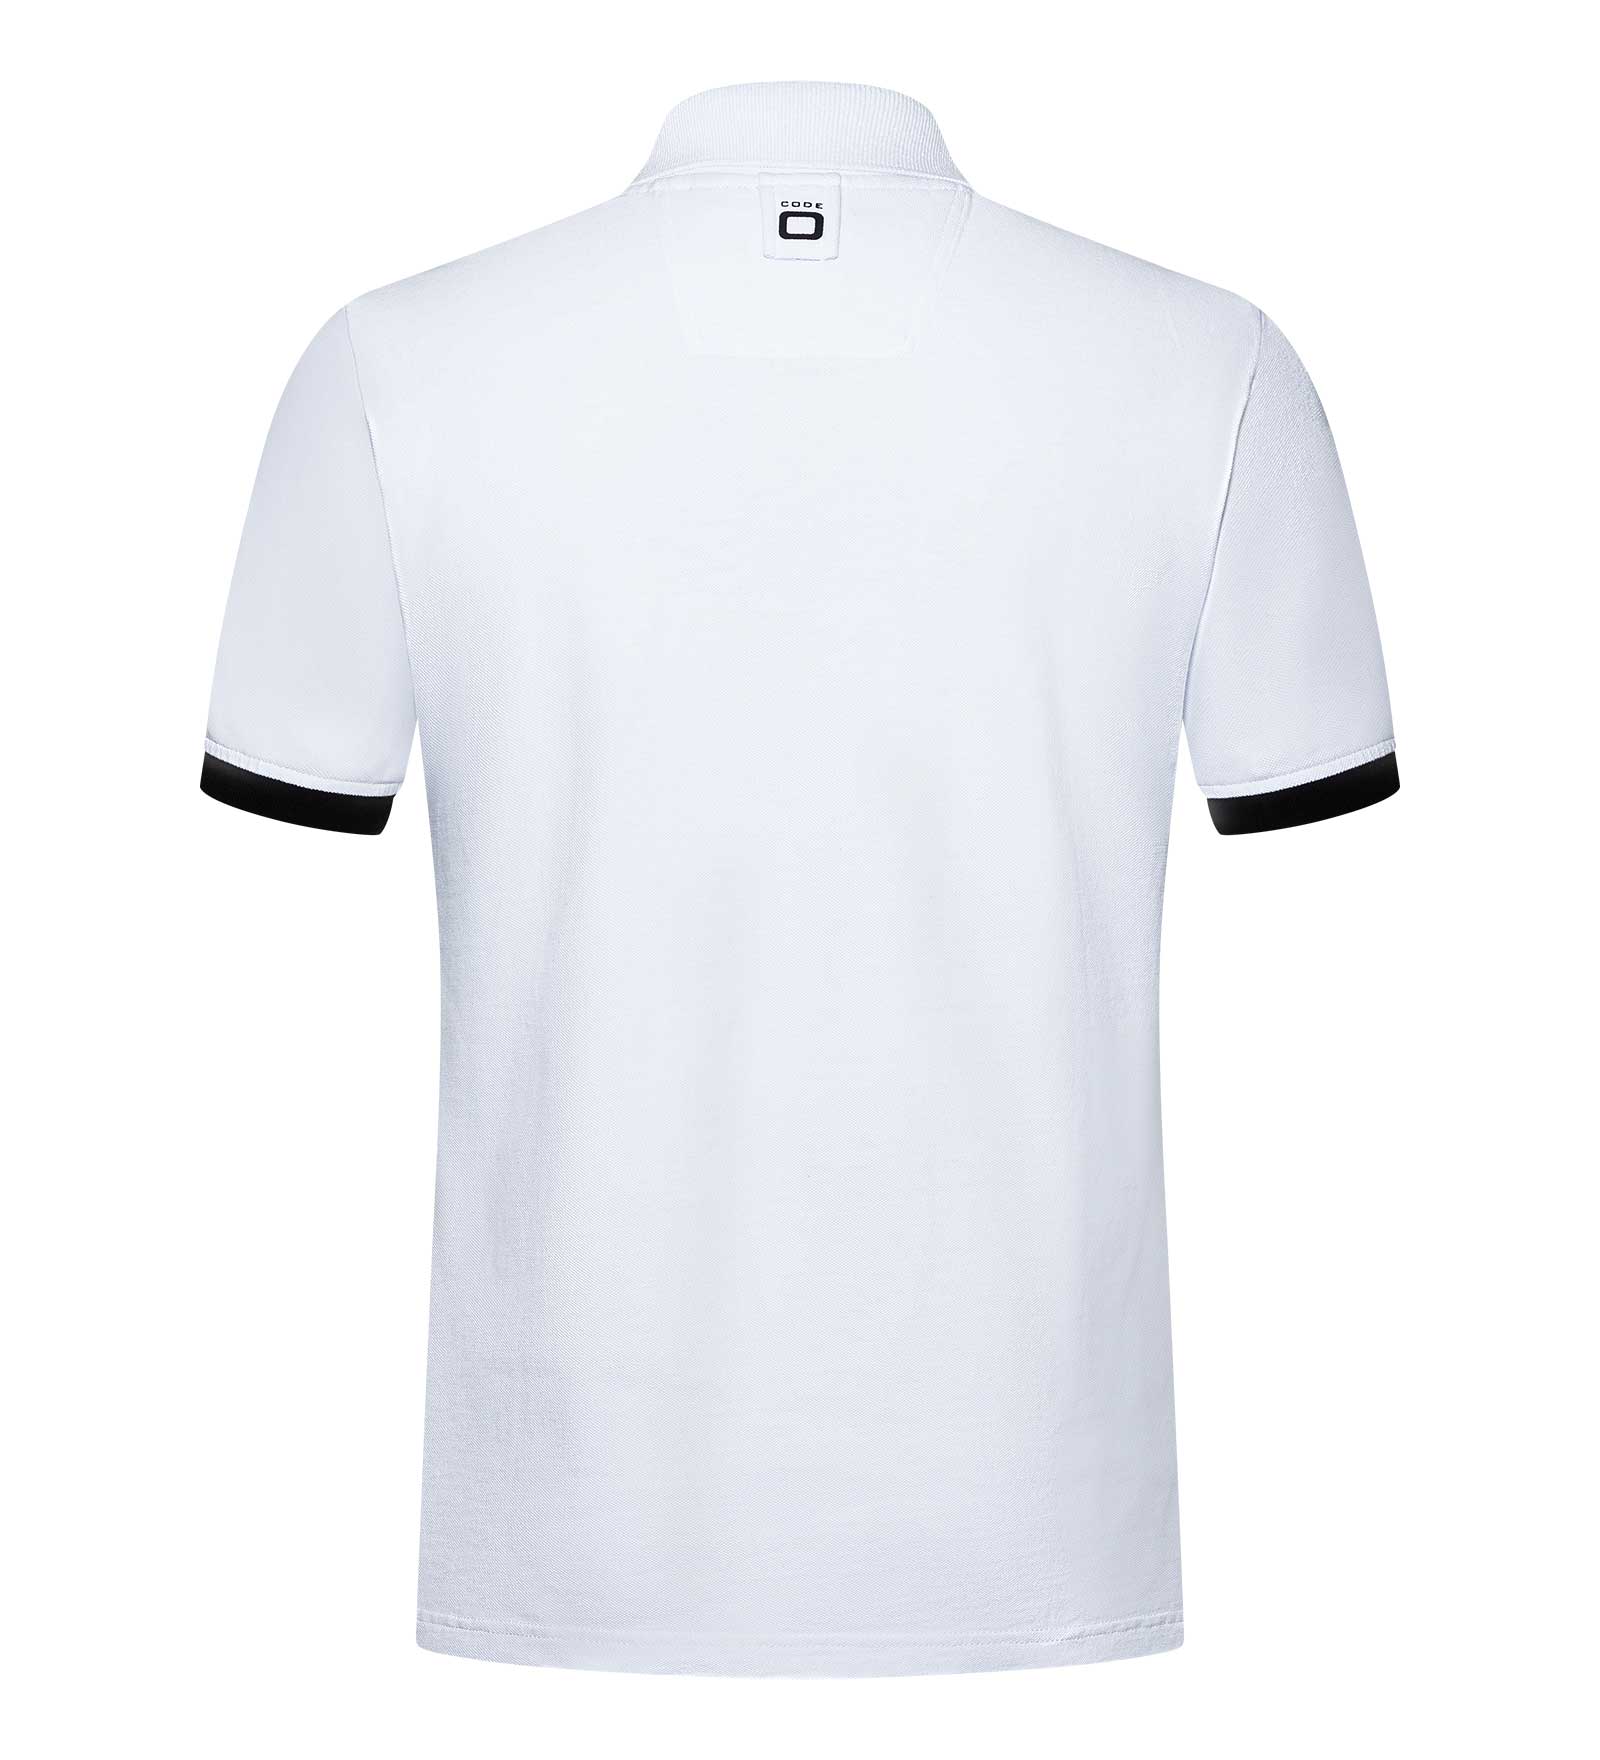 White polo shirt with black cuffs